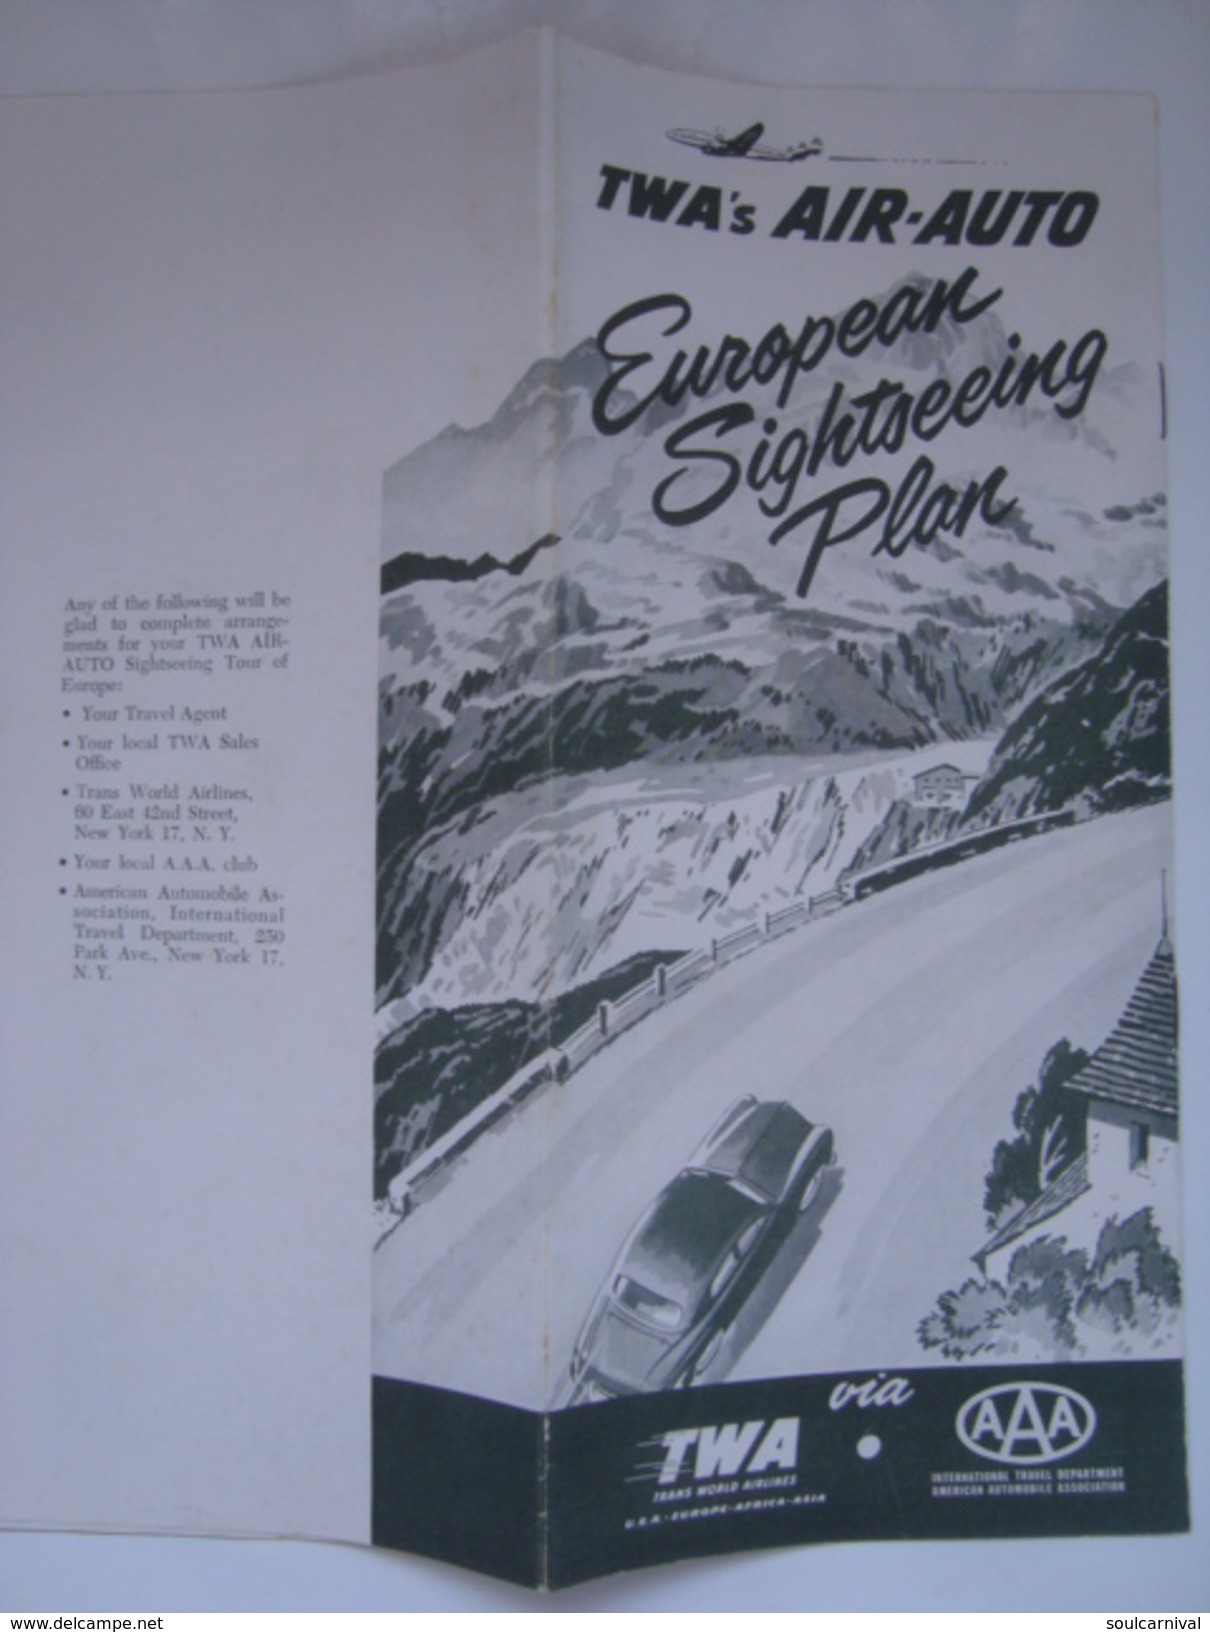 TWA'S AIR-AUTO. EUROPEAN SIGHTSEEING PLAN. TWA VIA AAA - 1952 APROX. 8 PAGES. AMERICAN AUTOMOBILE ASSOCIATION. - Advertisements